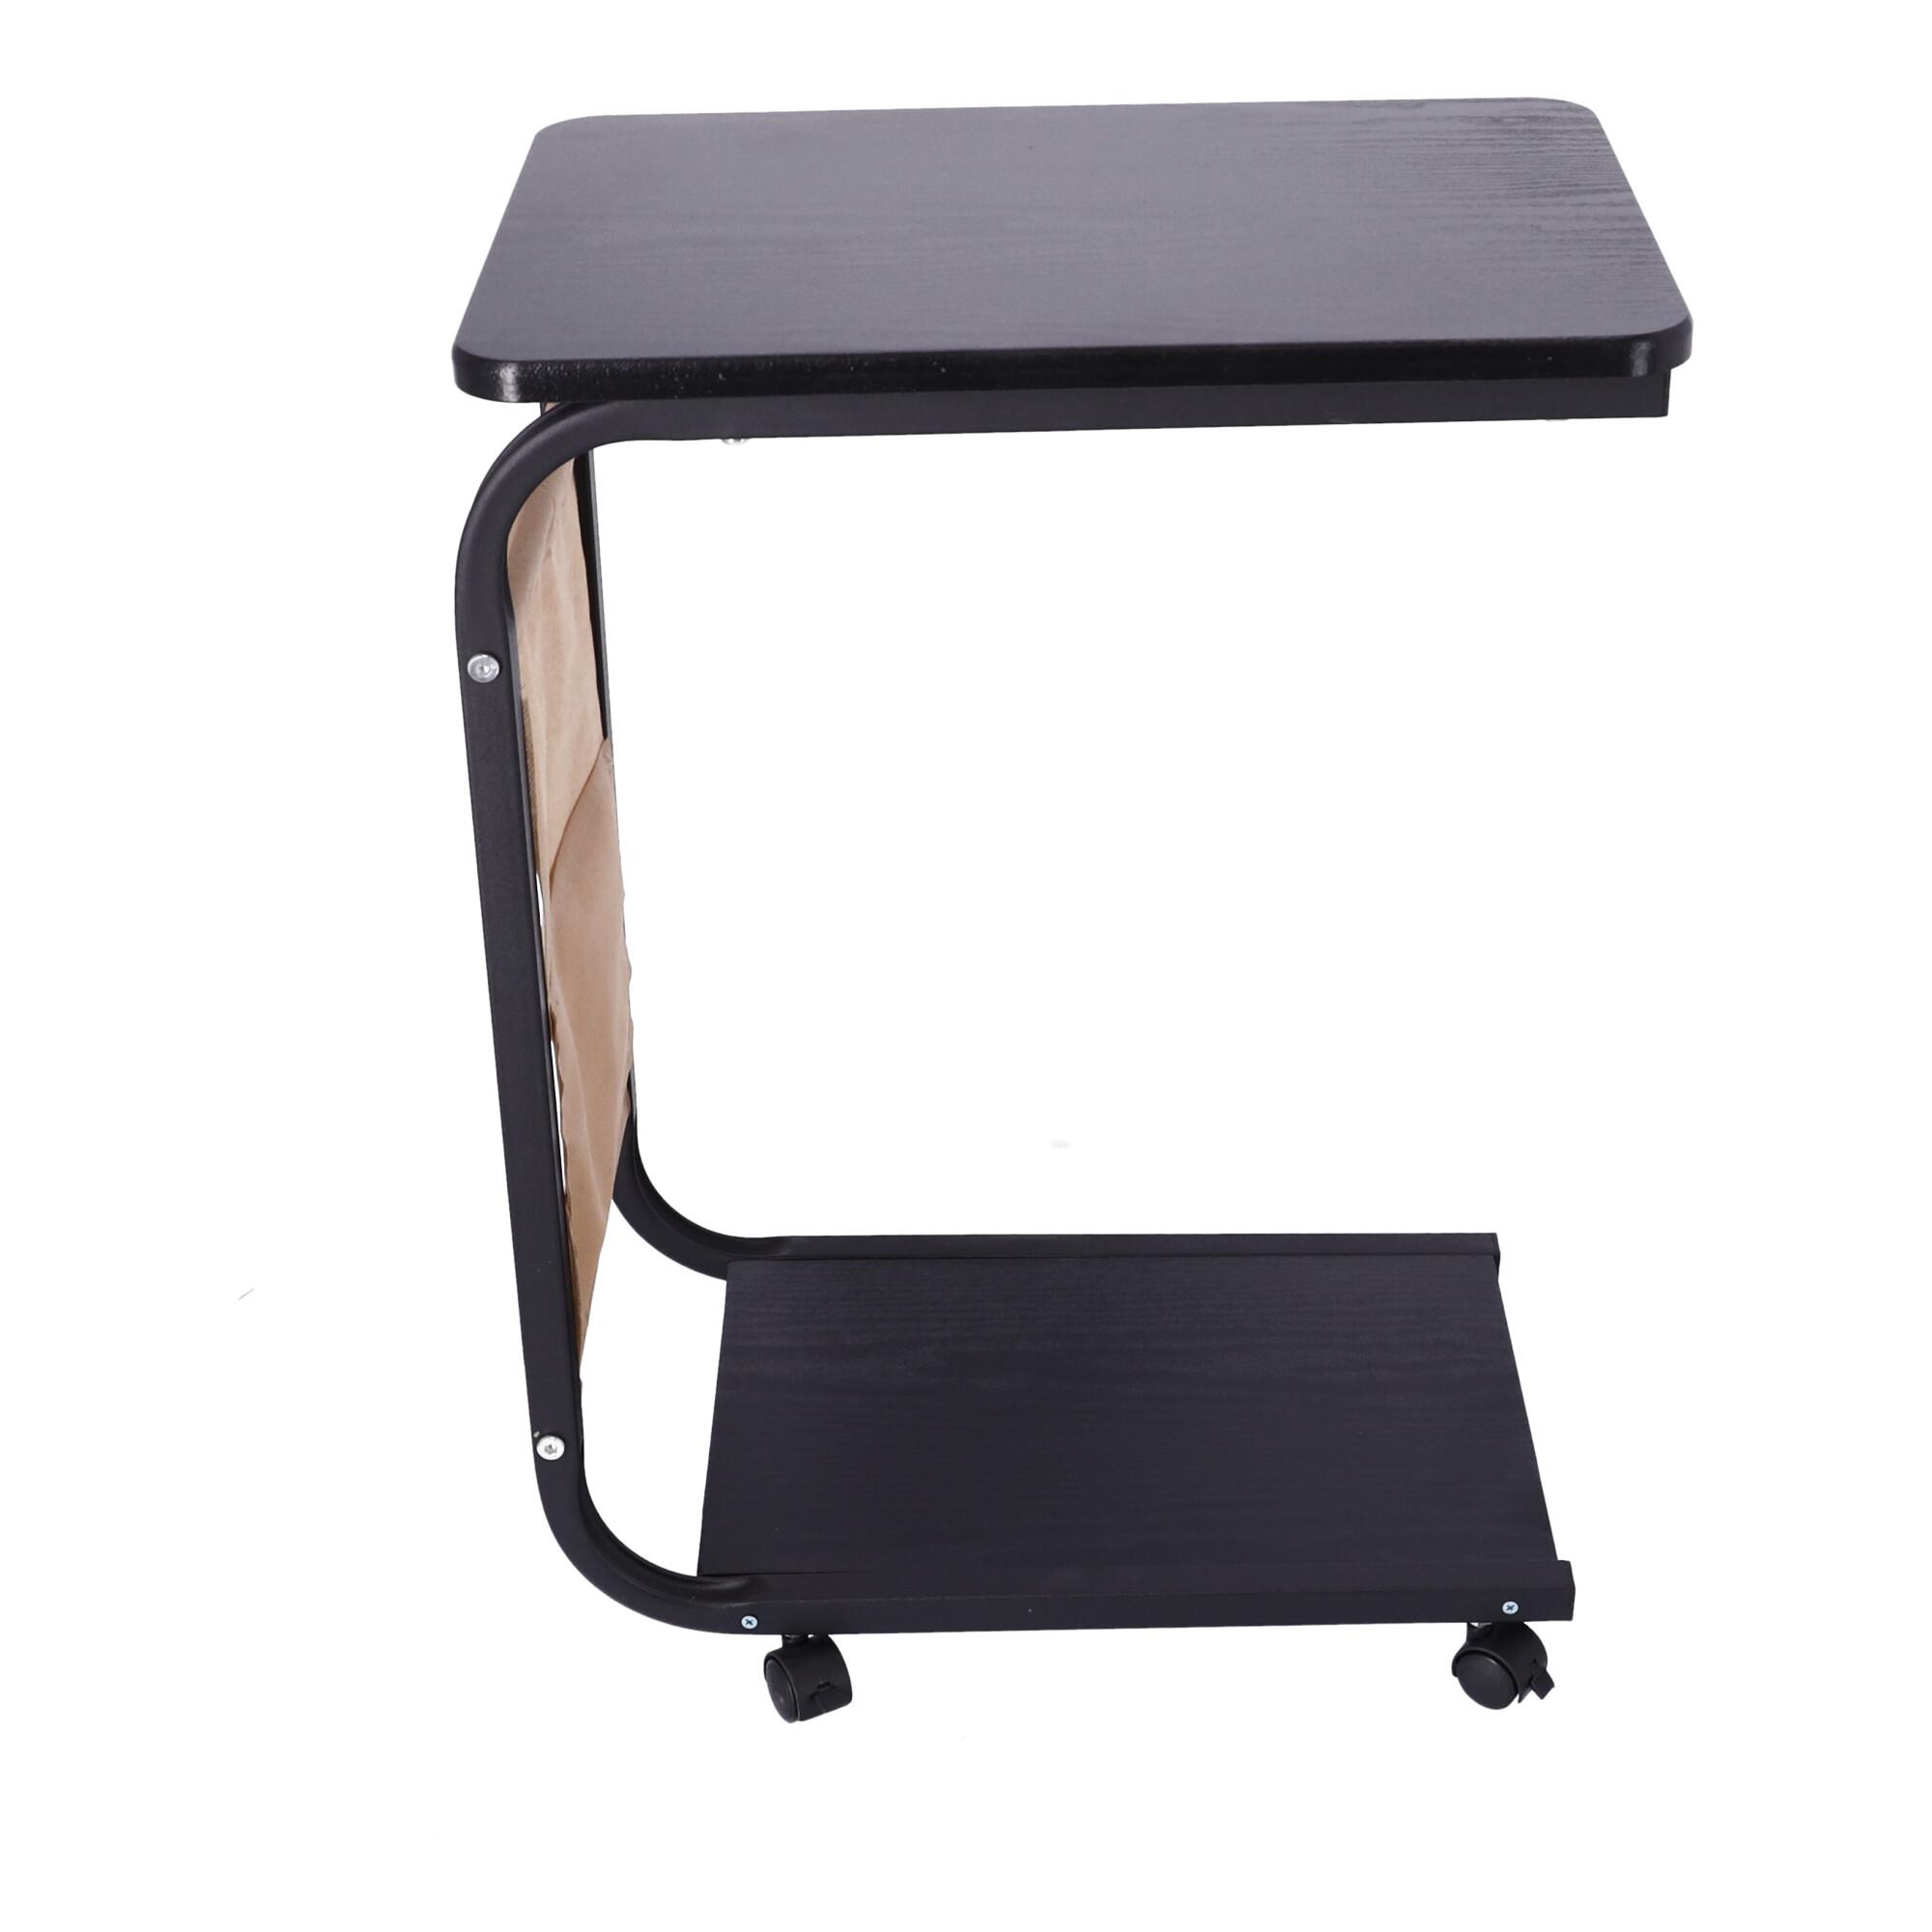 Mobile coffee table / Side coffee table on wheels - black